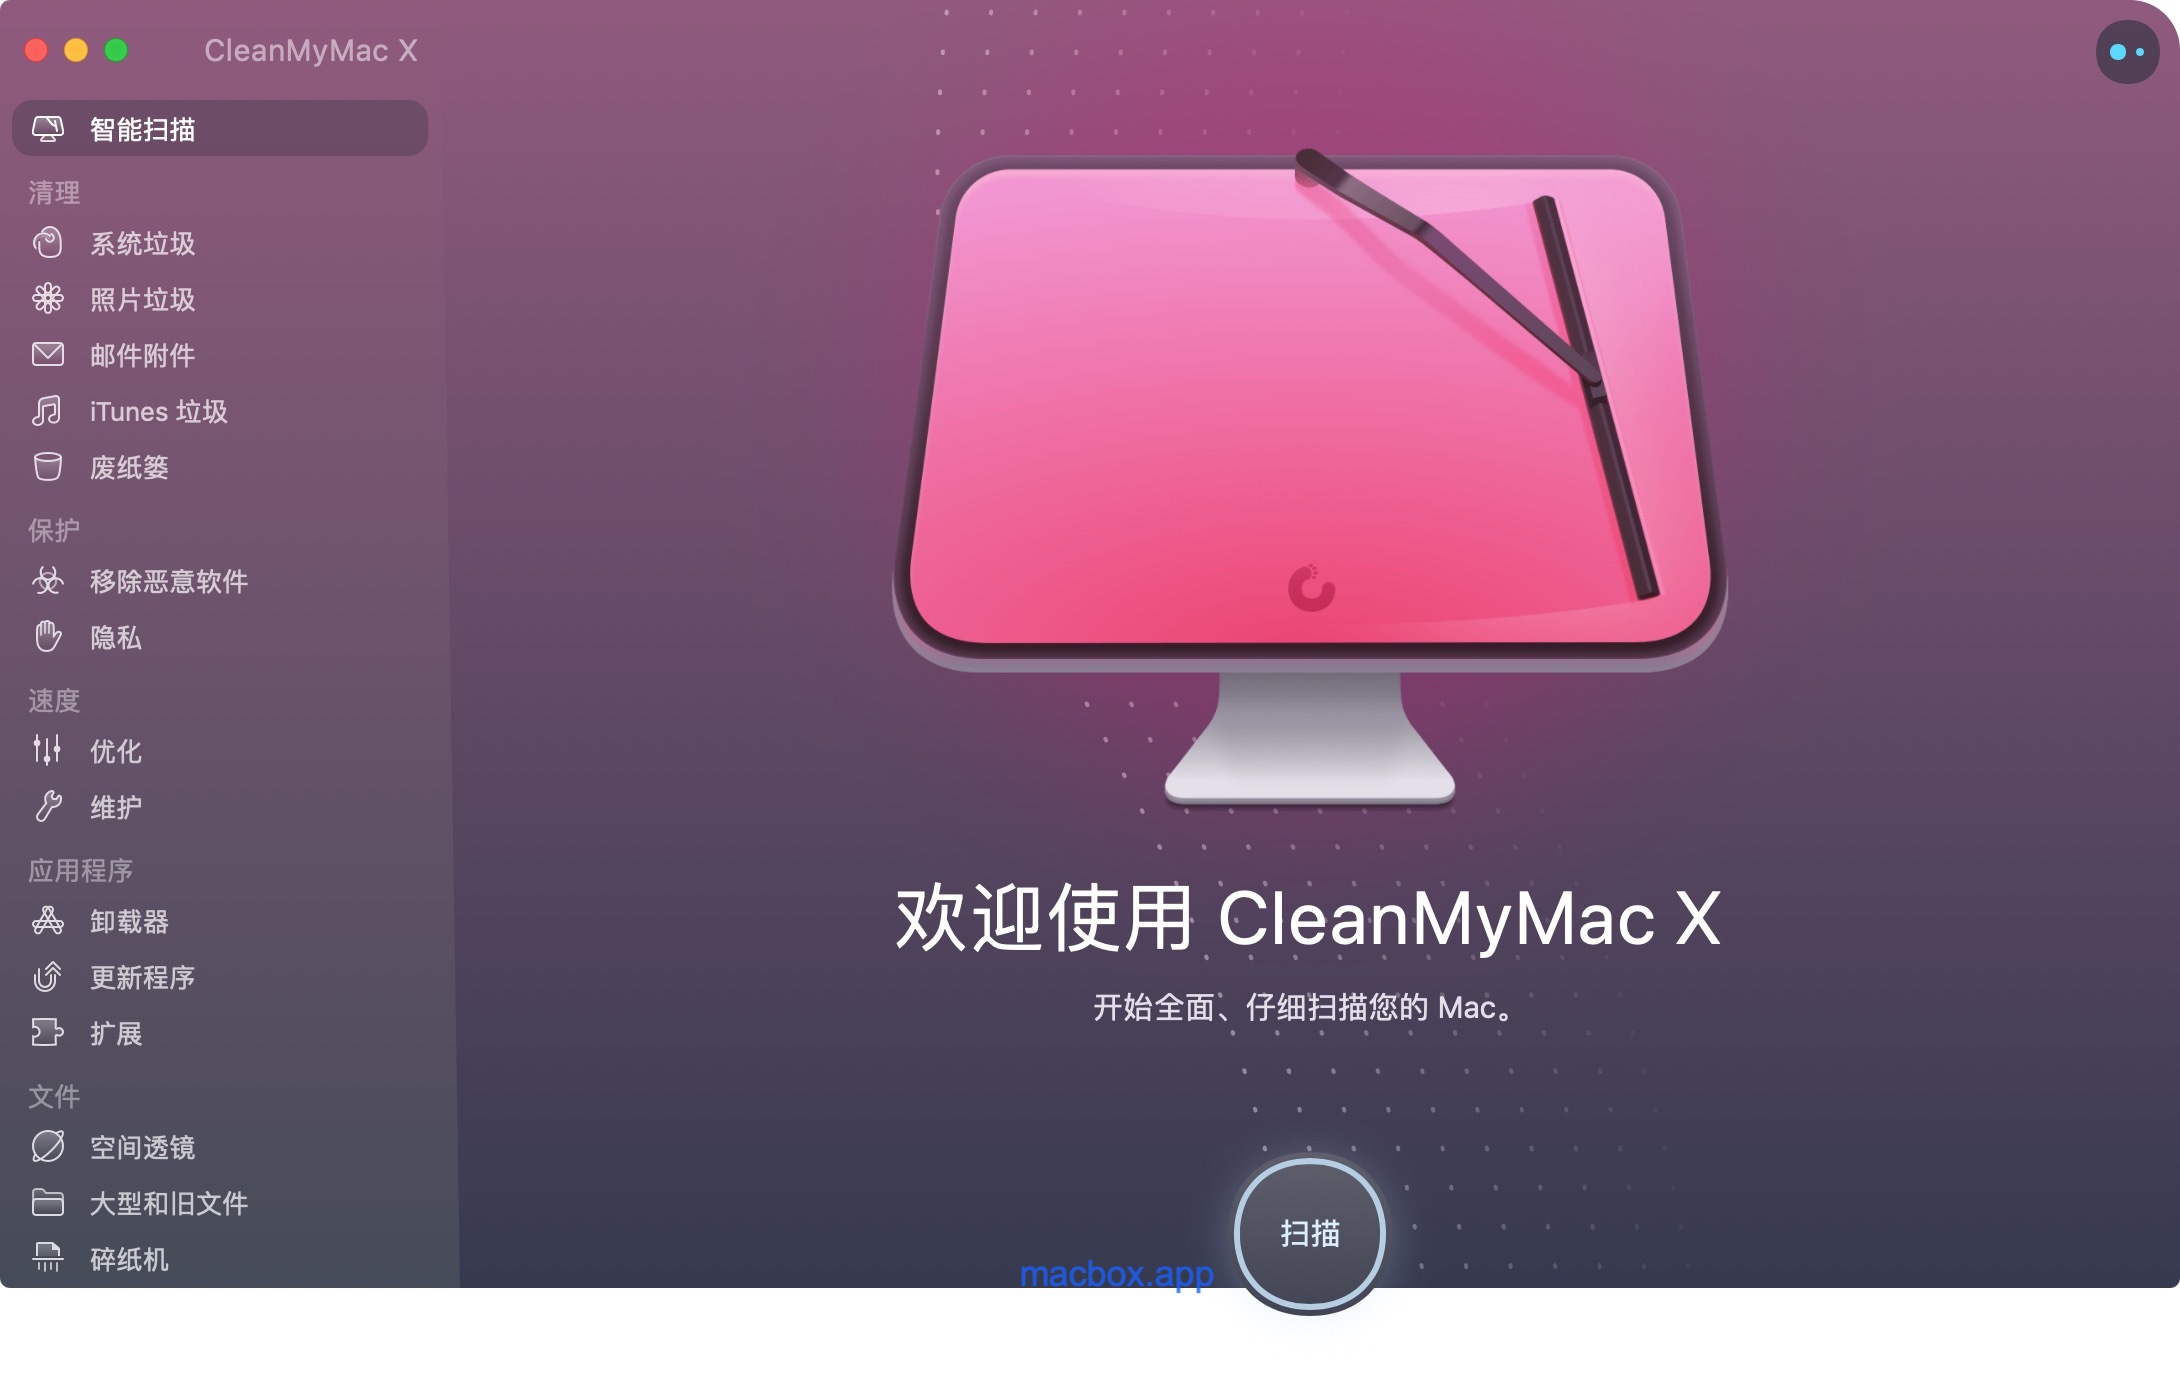 cleanmymac x latest version